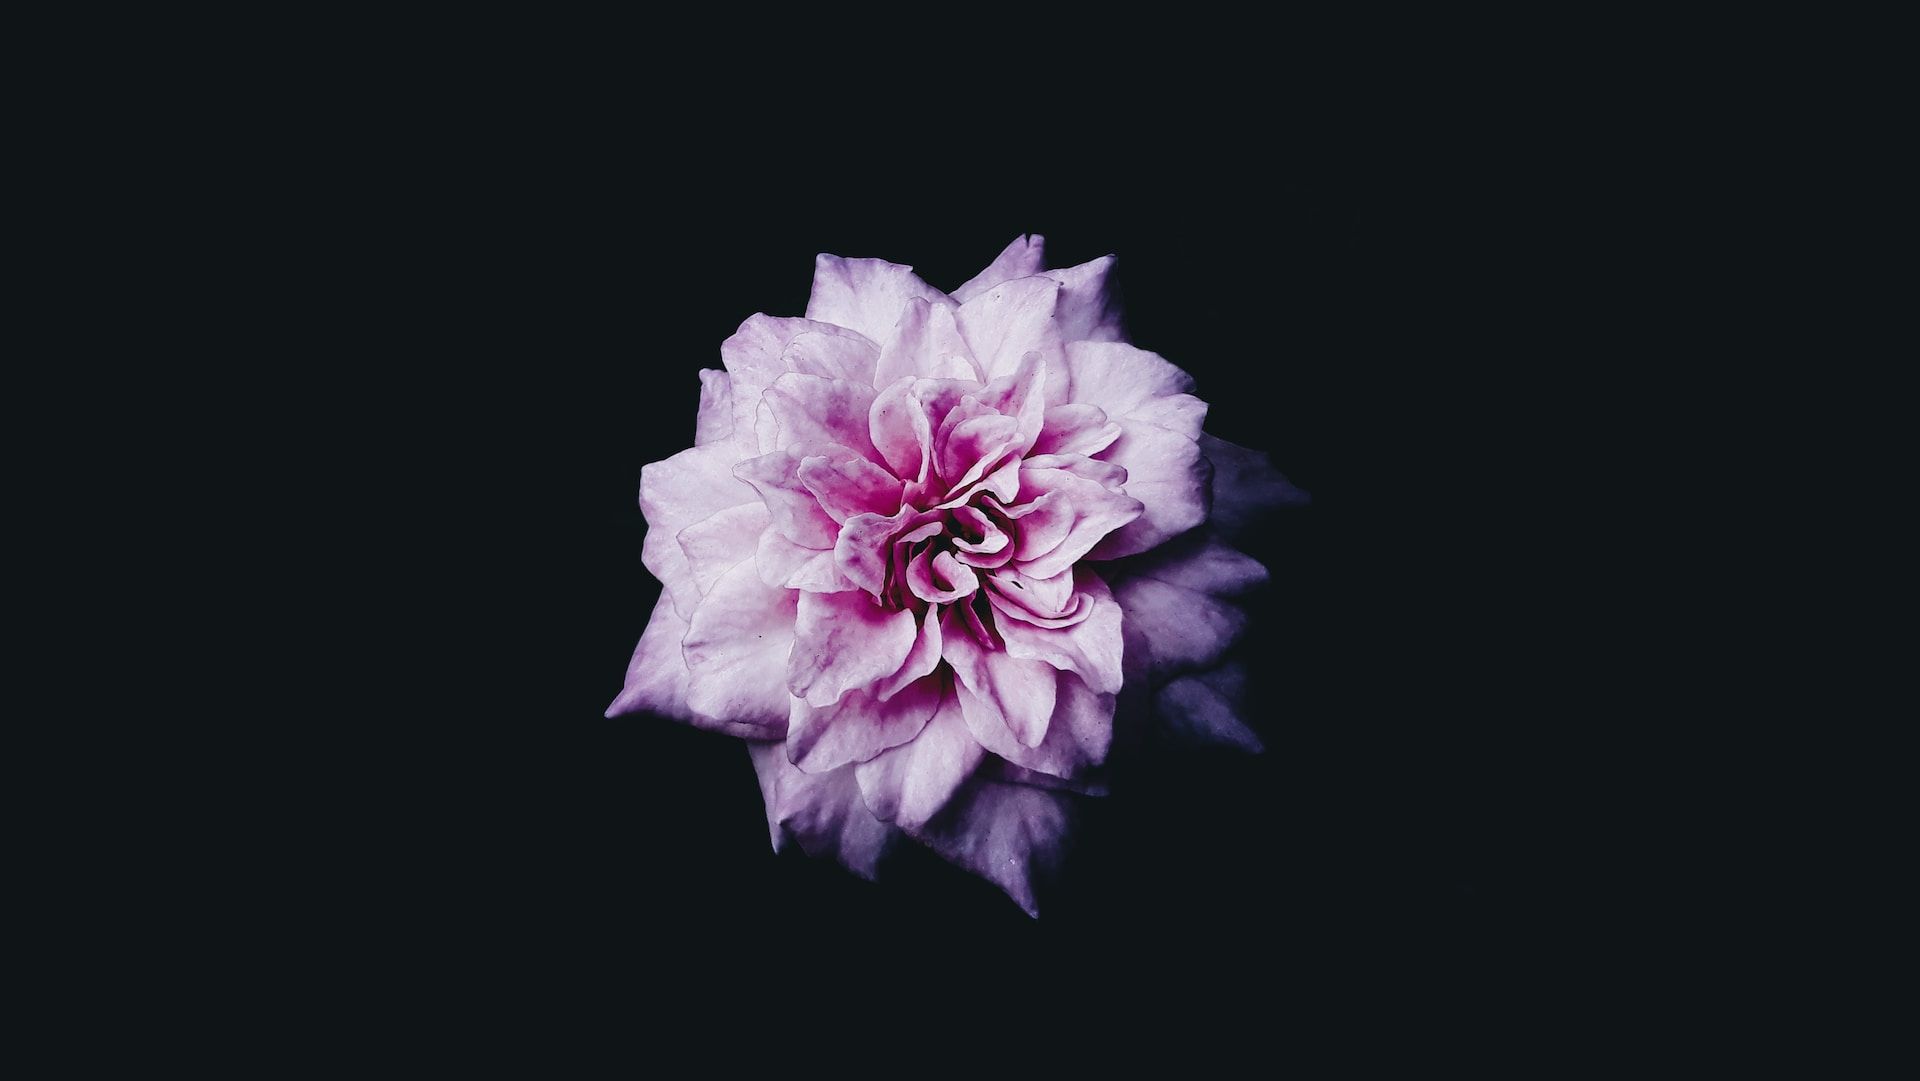 purple coloured flower against a black empty background